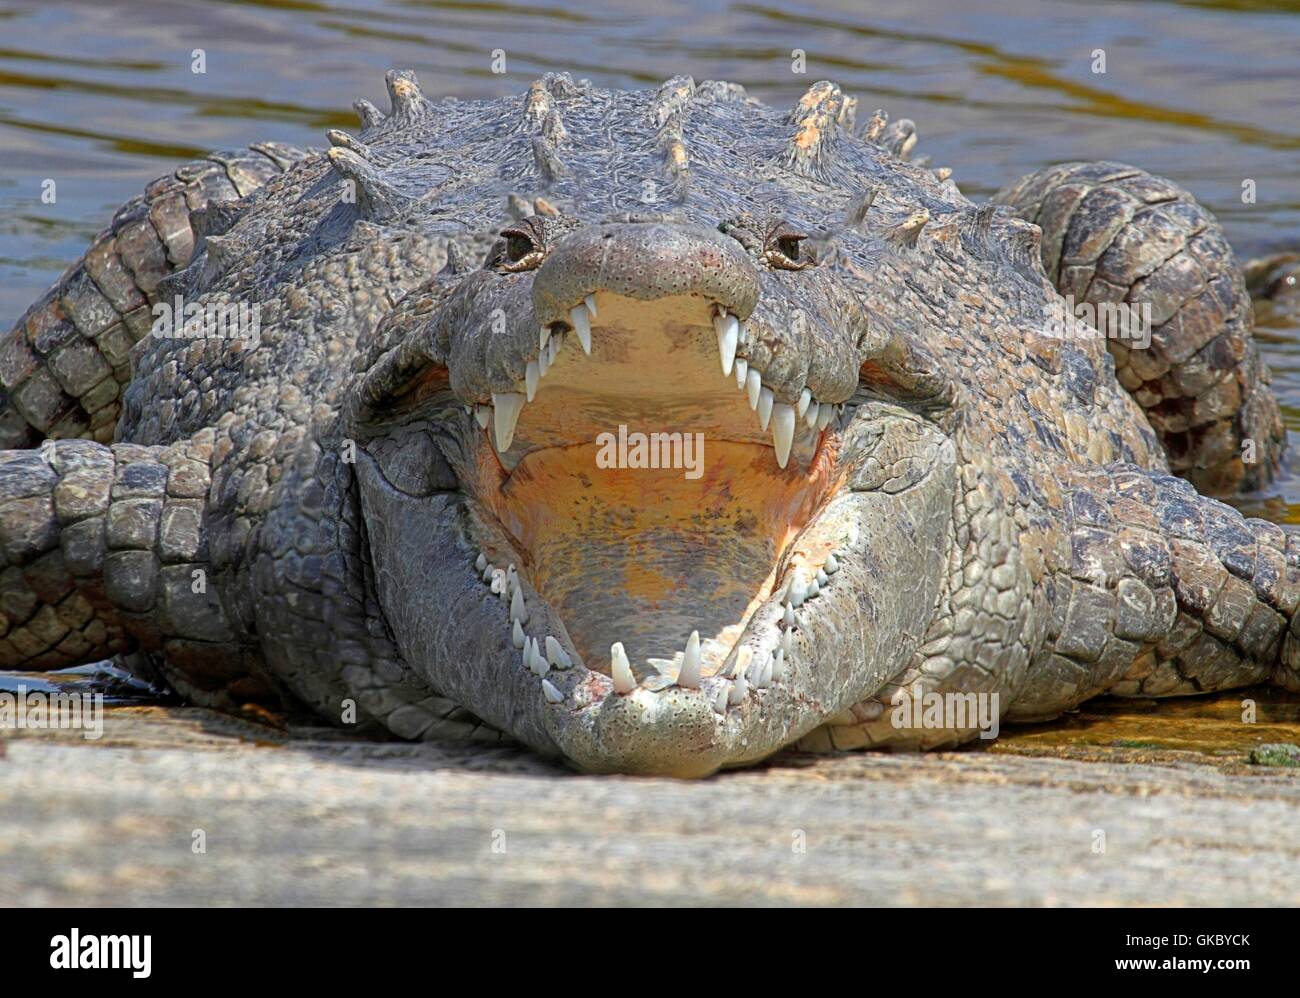 Reptile crocodile sauvage Banque D'Images